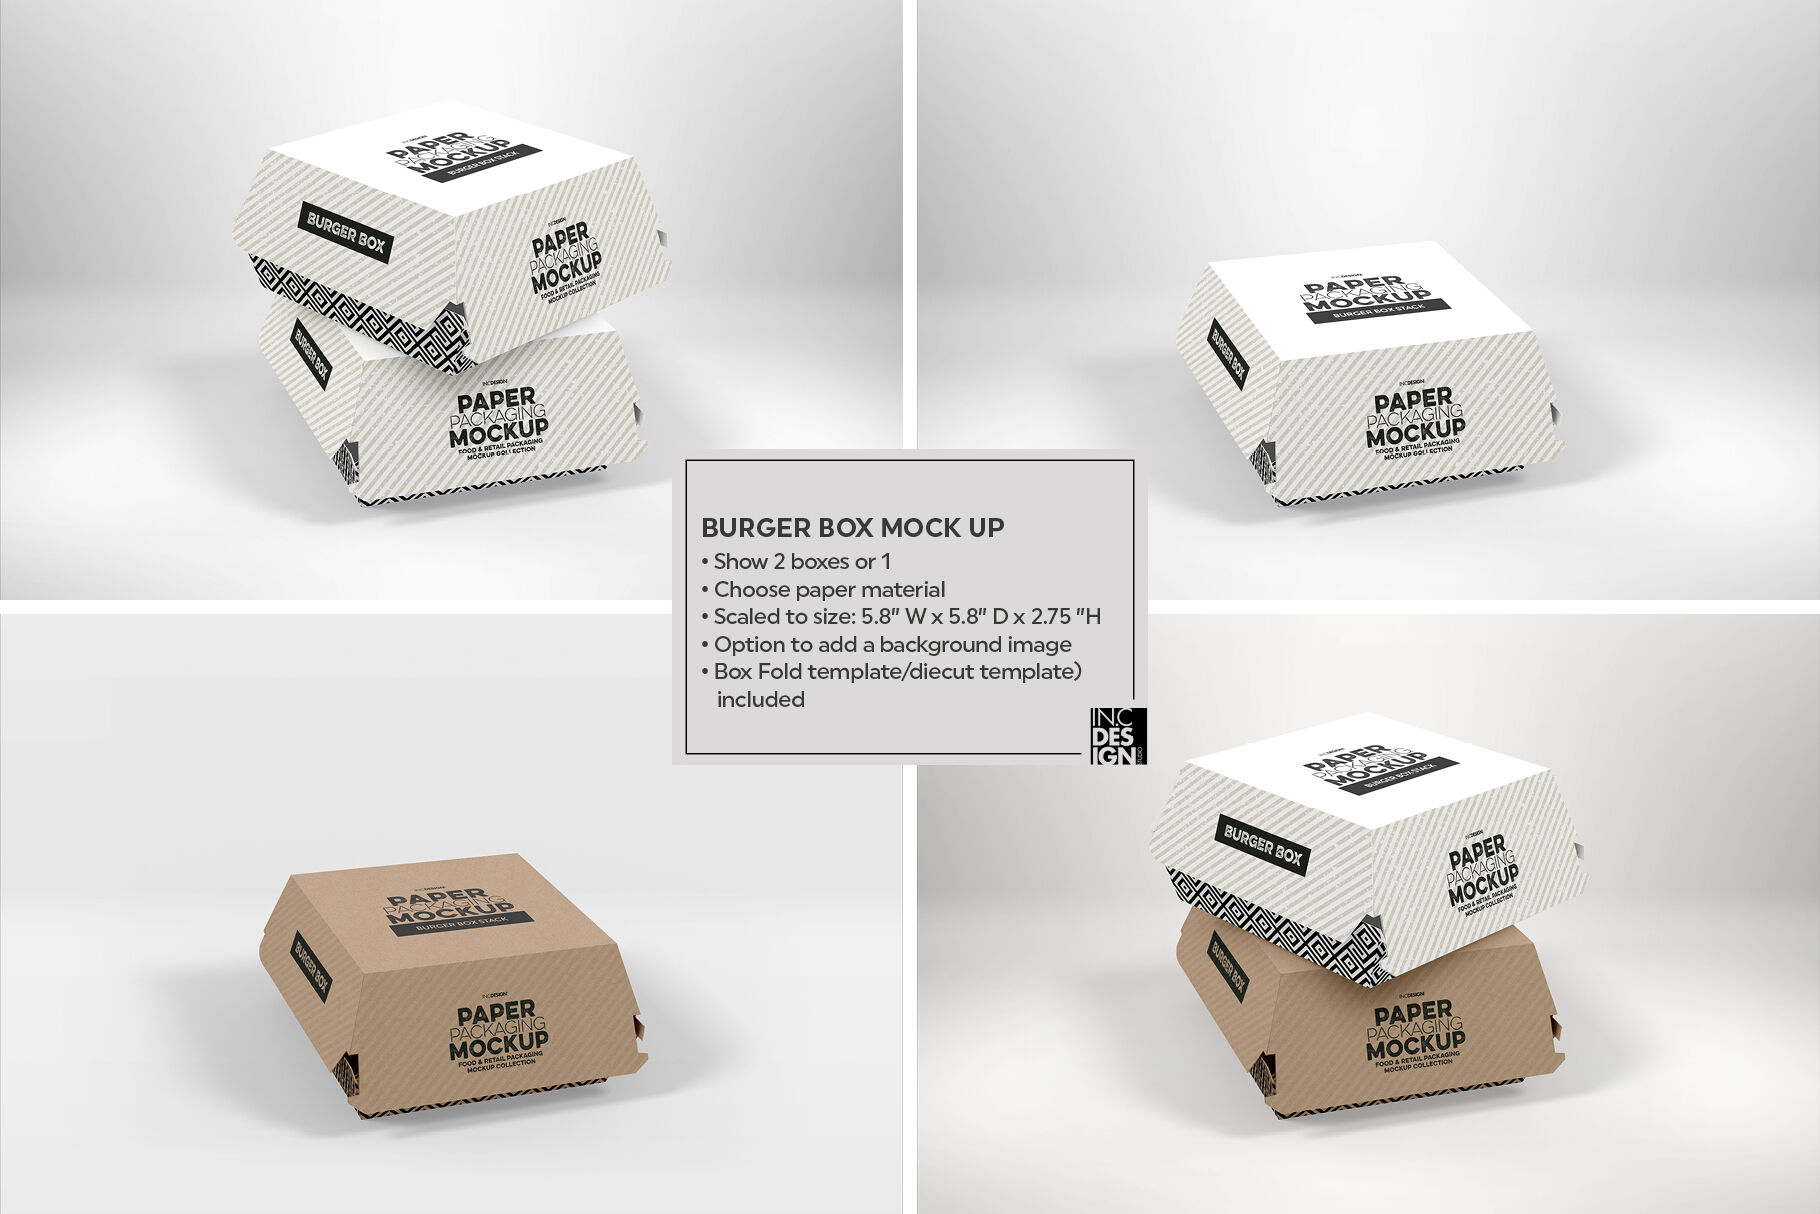 Download Burger Box Packaging MockUp By INC Design Studio ...